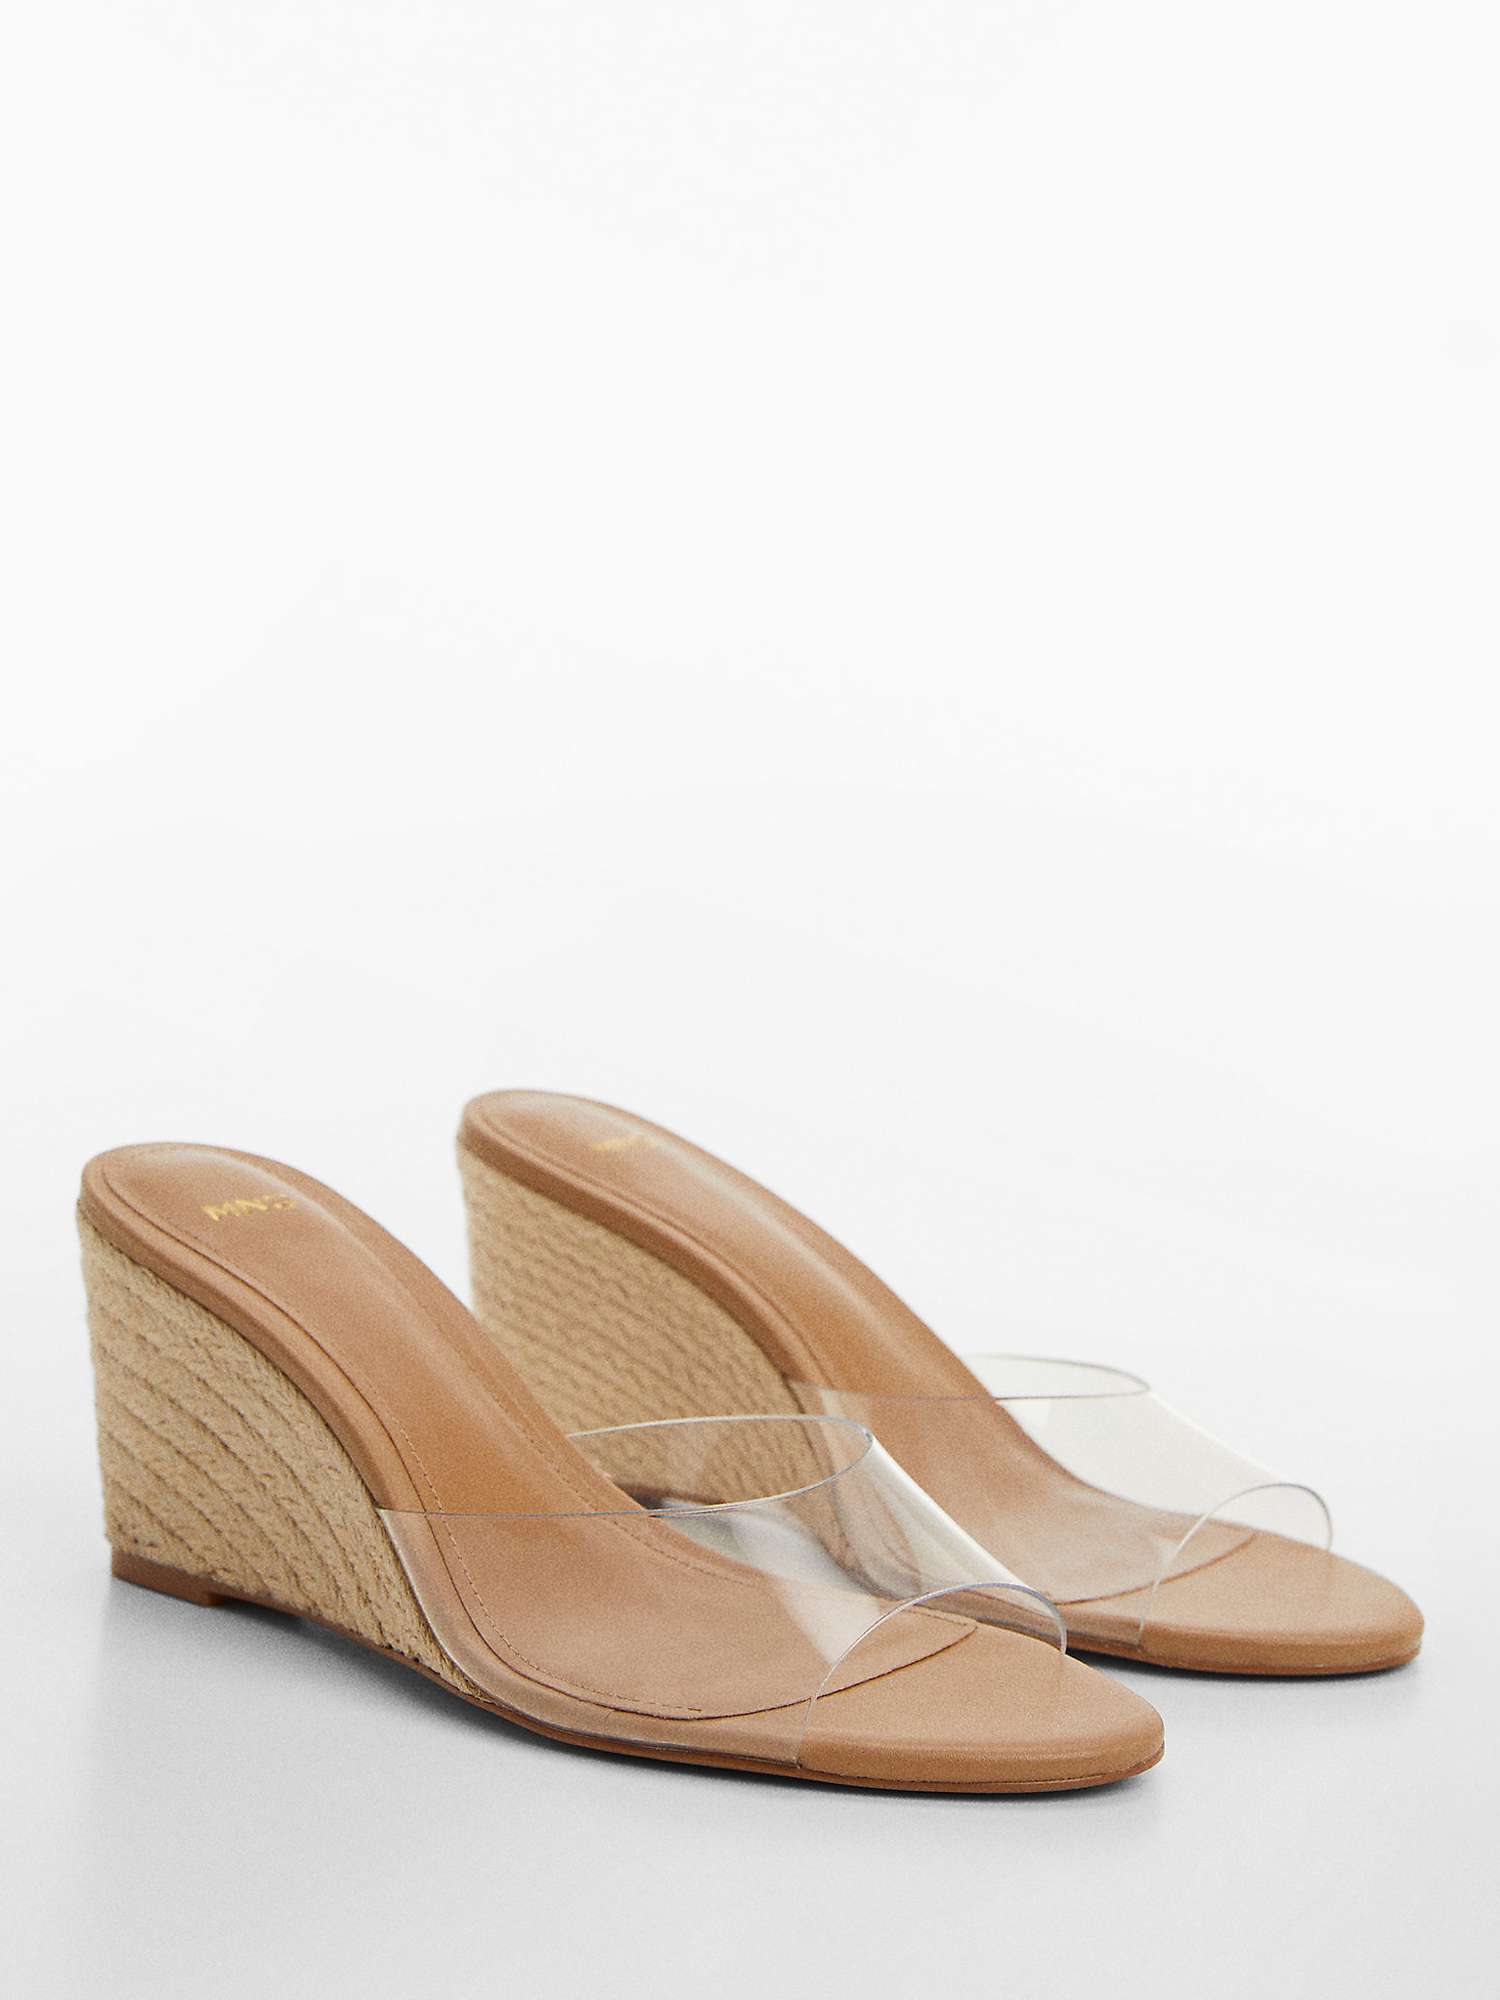 Buy Mango Cala Wedge Sandals, Light Pastel Pink Online at johnlewis.com